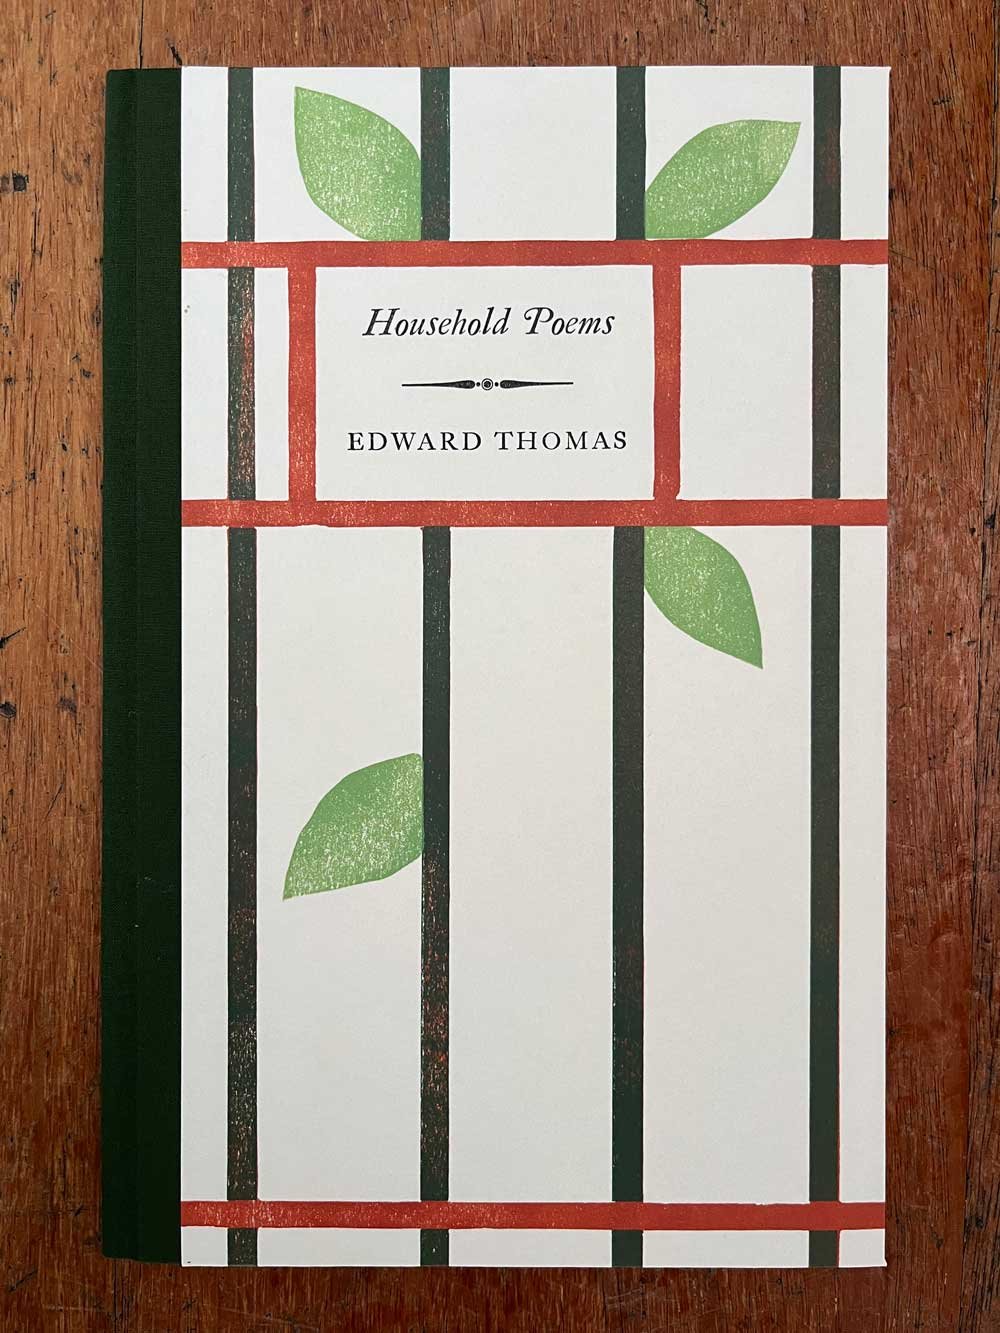 Household Poems: Edward Thomas, 2022 (Copy) (Copy)